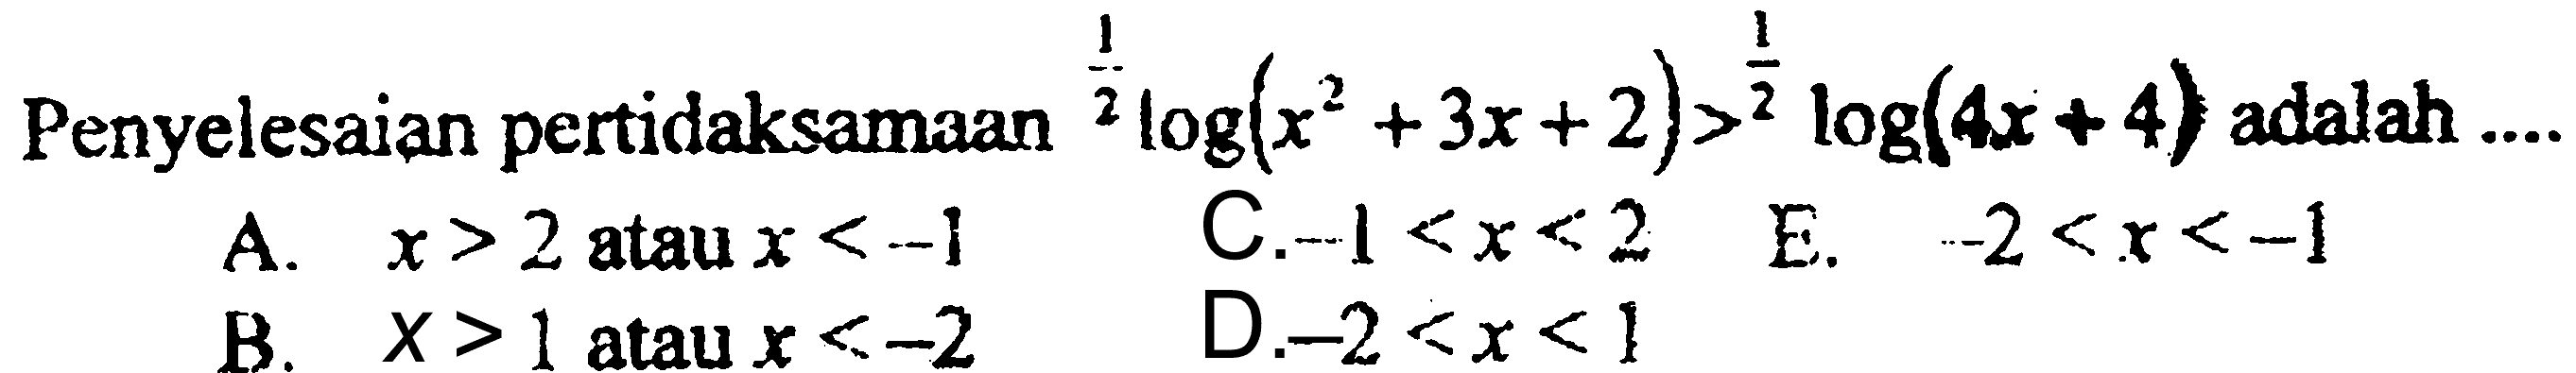 Penyelesaian pertidaksamaan  (1/2)log(x^2+3x+2)>(1/2)log(4x+4)  adalah  ...  